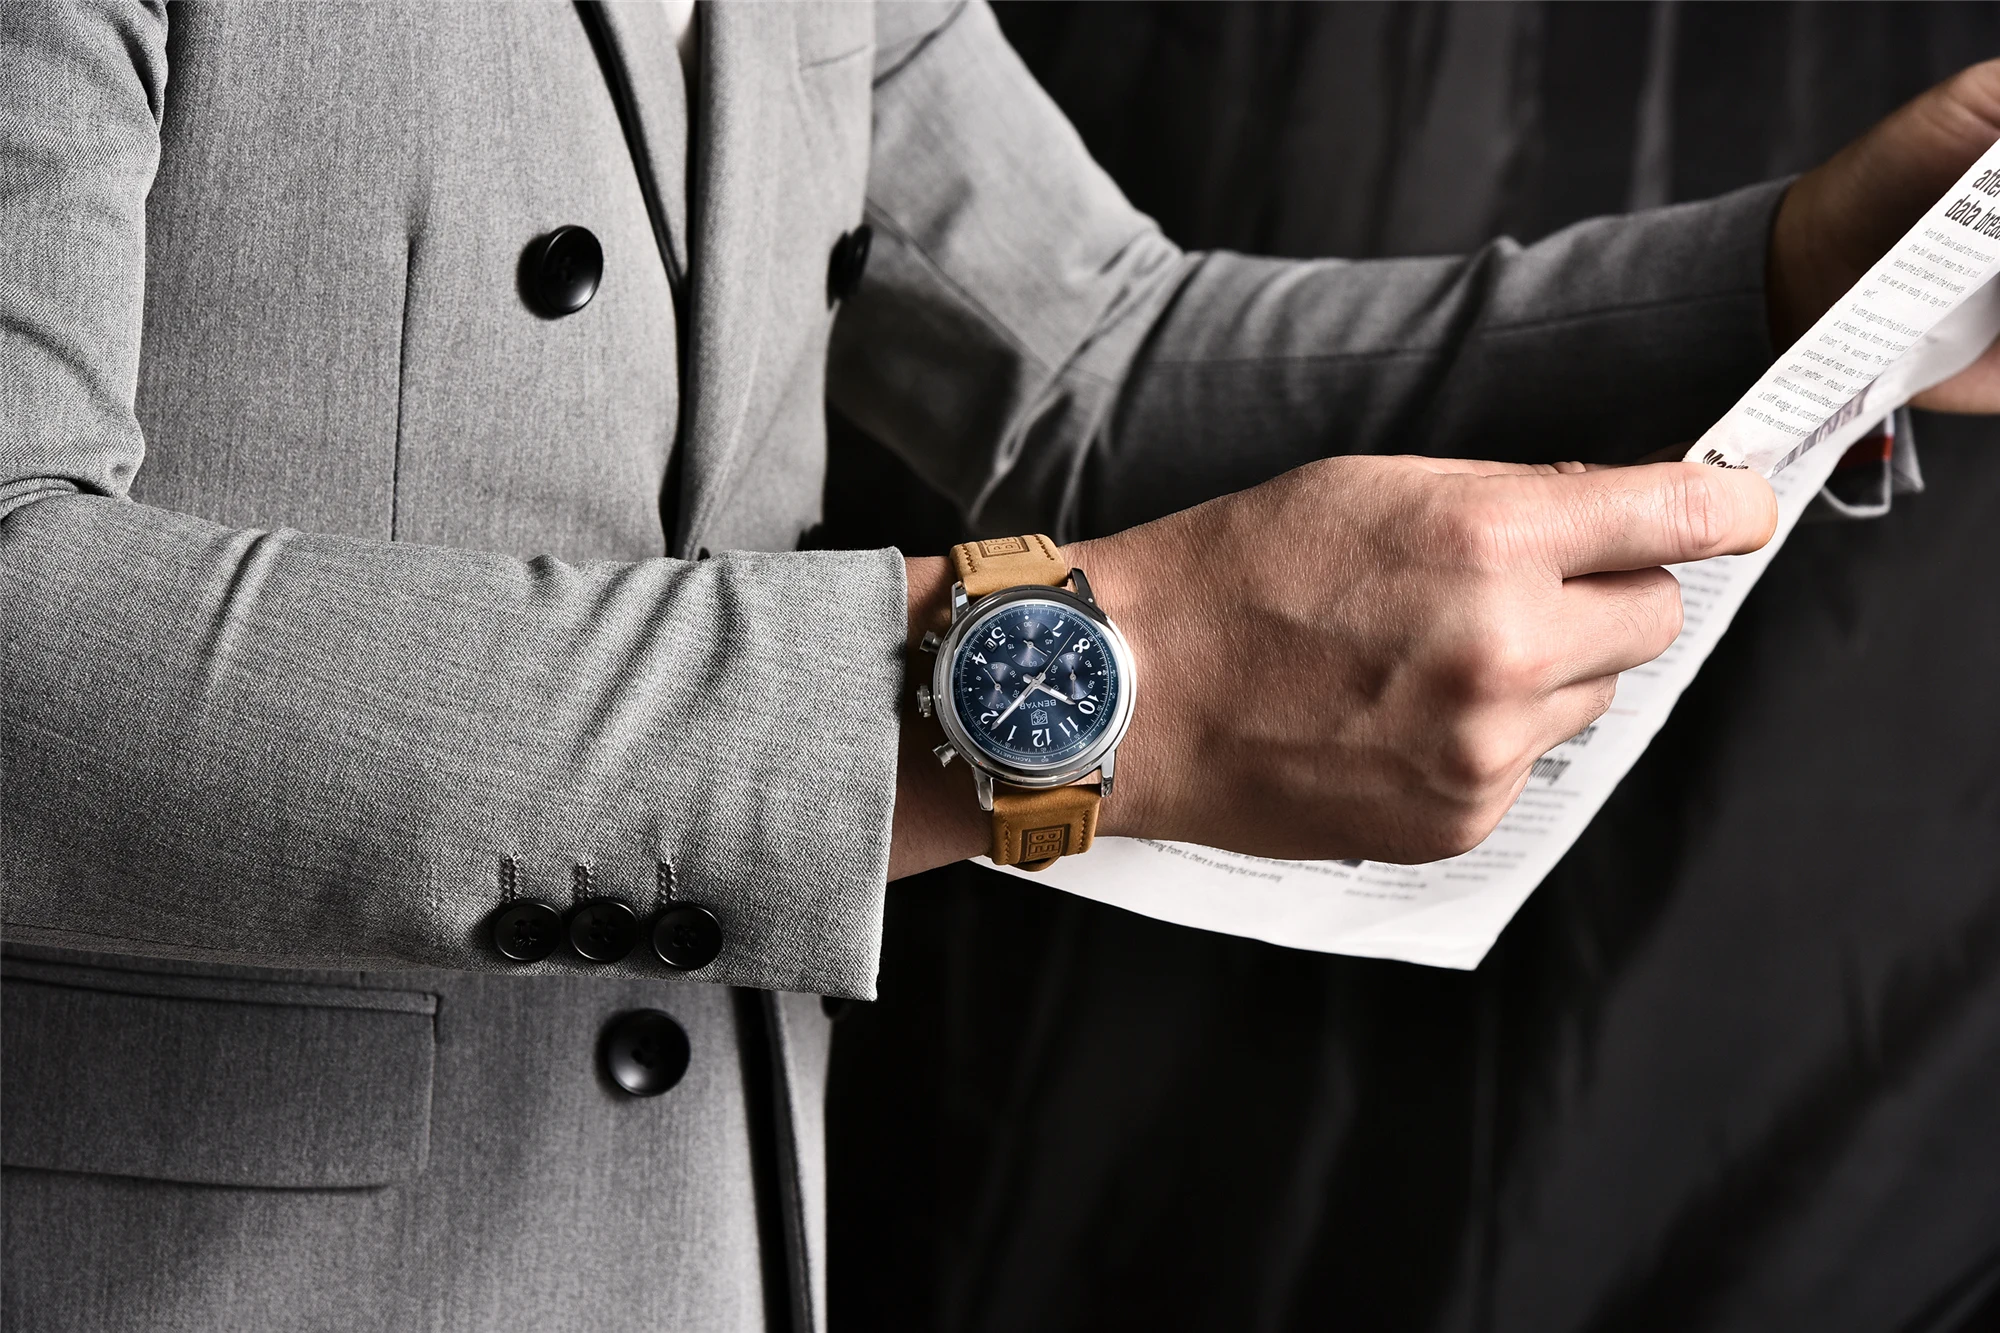 New BENYAR 2022 Luxury Men Quartz Wristwatch Sports Leather Military Watches 50ATM Waterproof Fashion Watch for Men reloj hombre